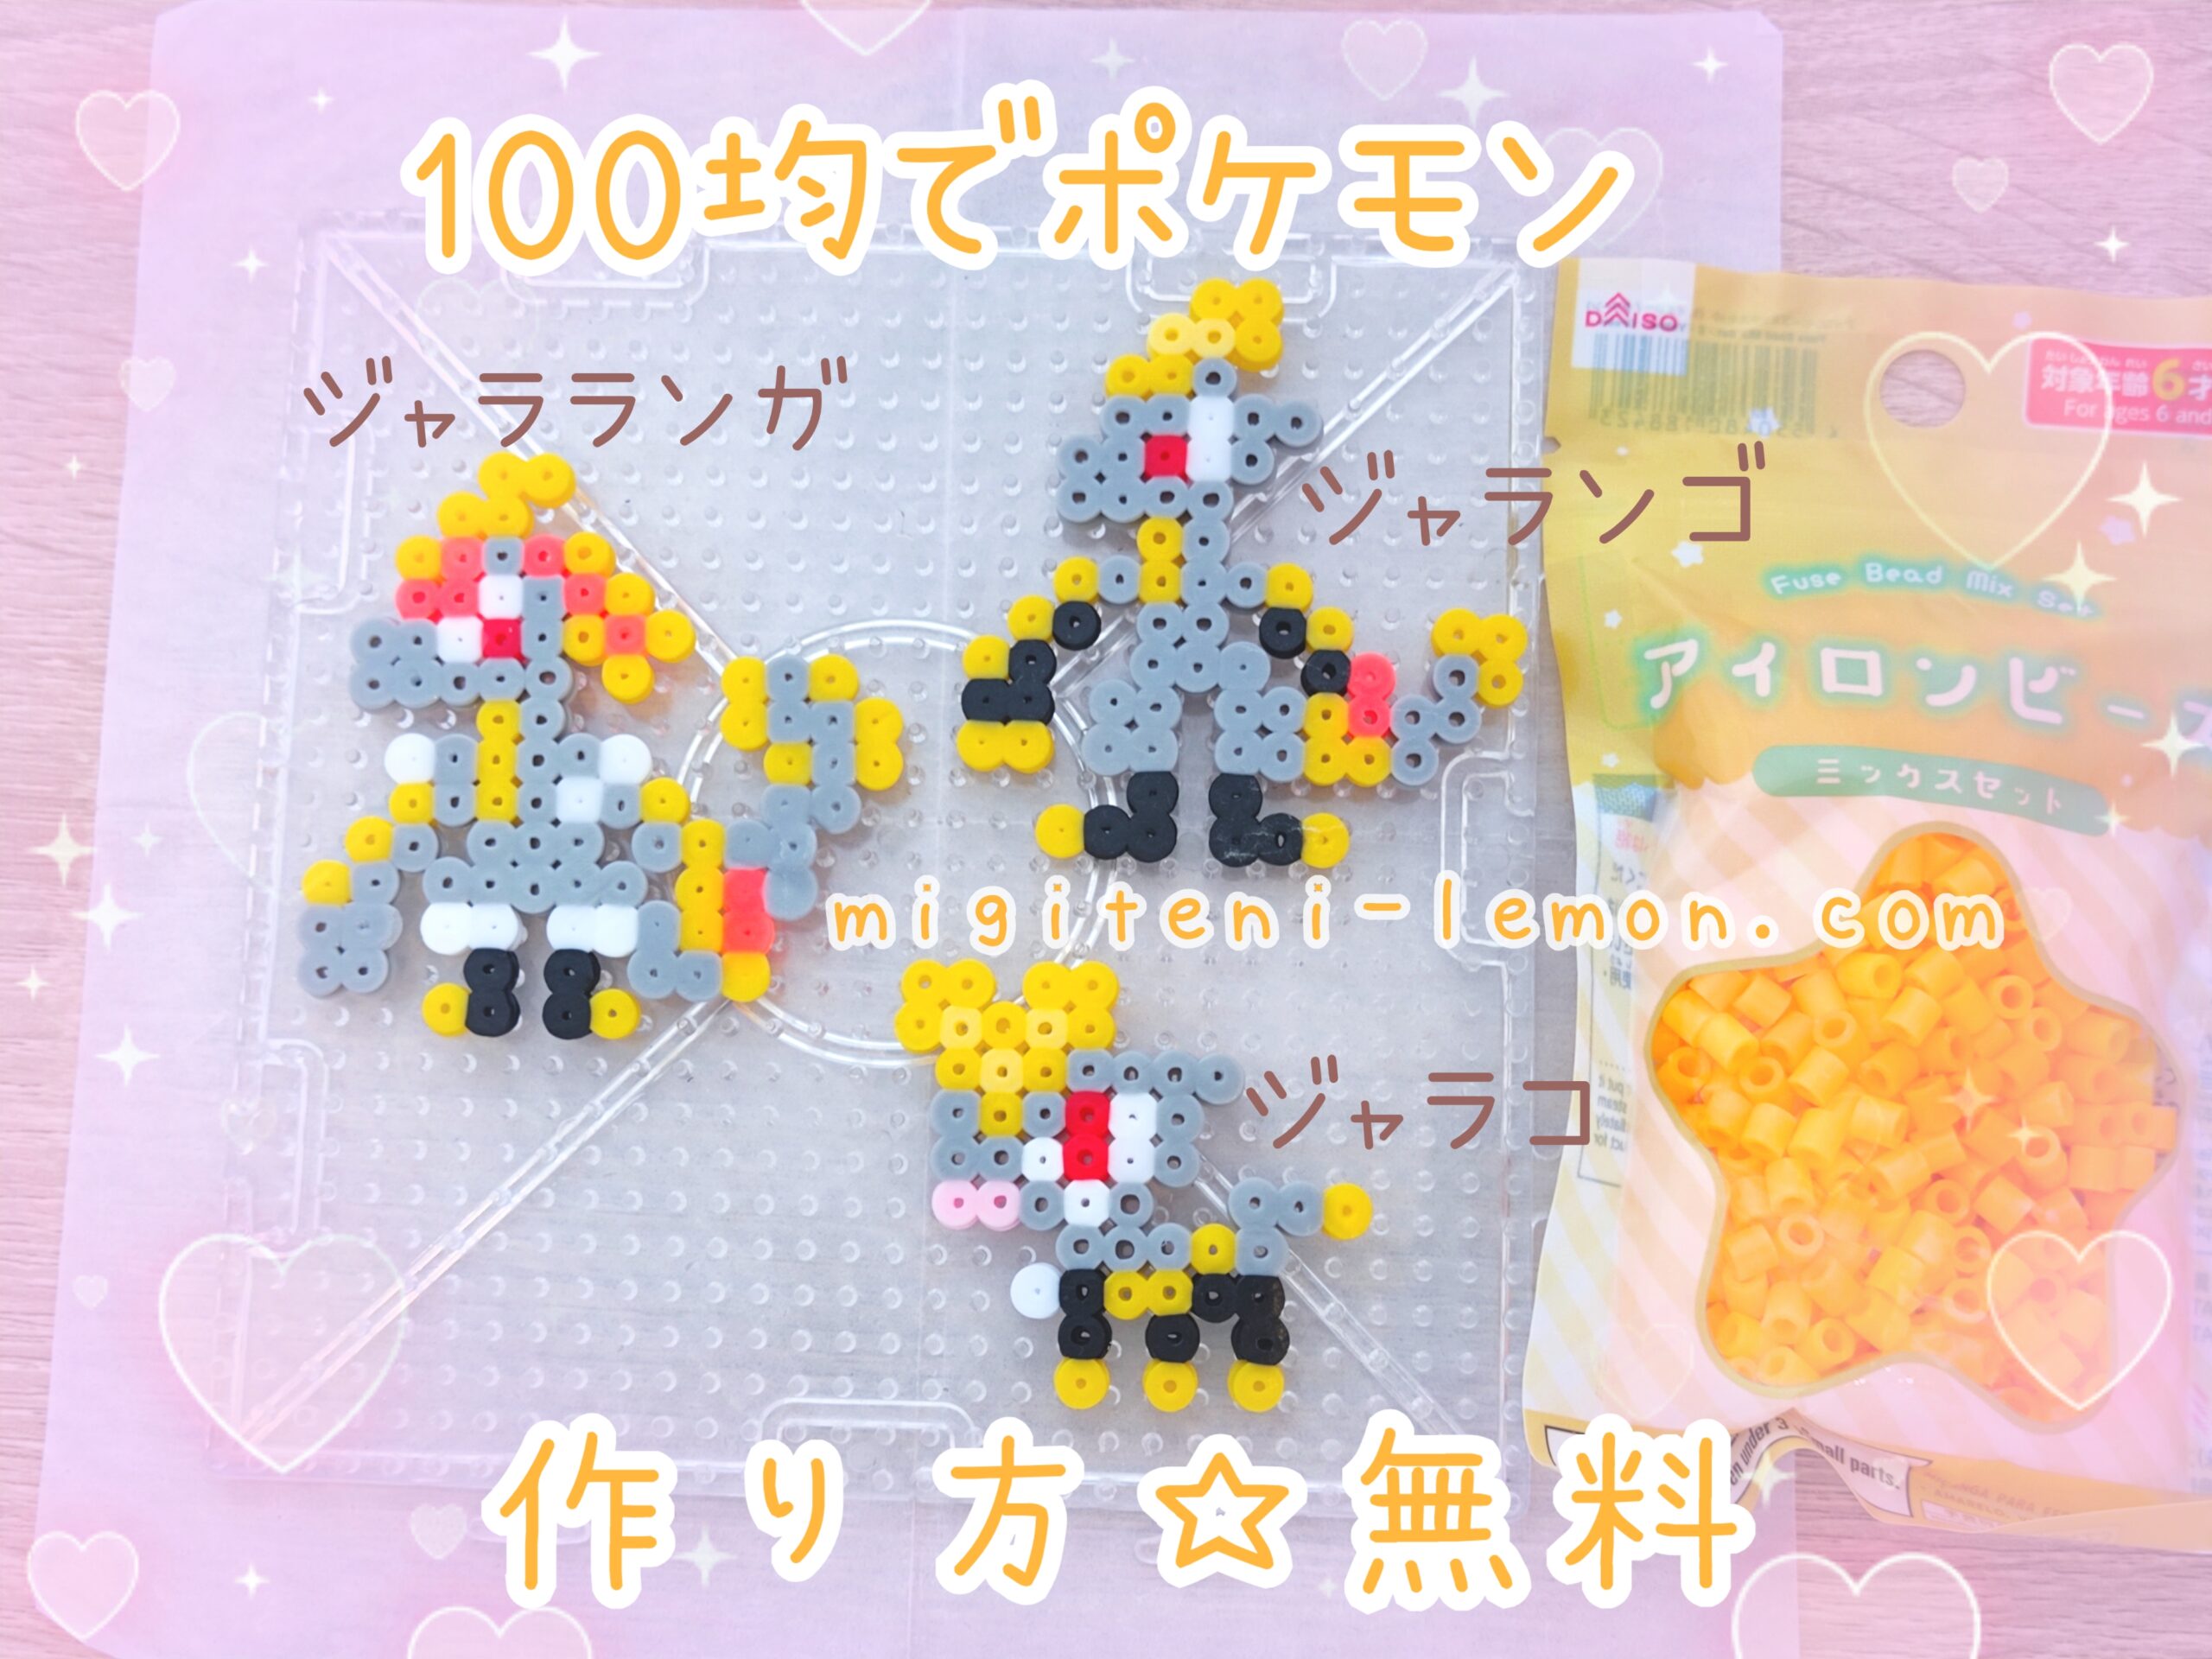 jyarako-jangmo-o-jyarango-hakamo-o-jyararanga-kommo-o-pokemon-beads-zuan-free